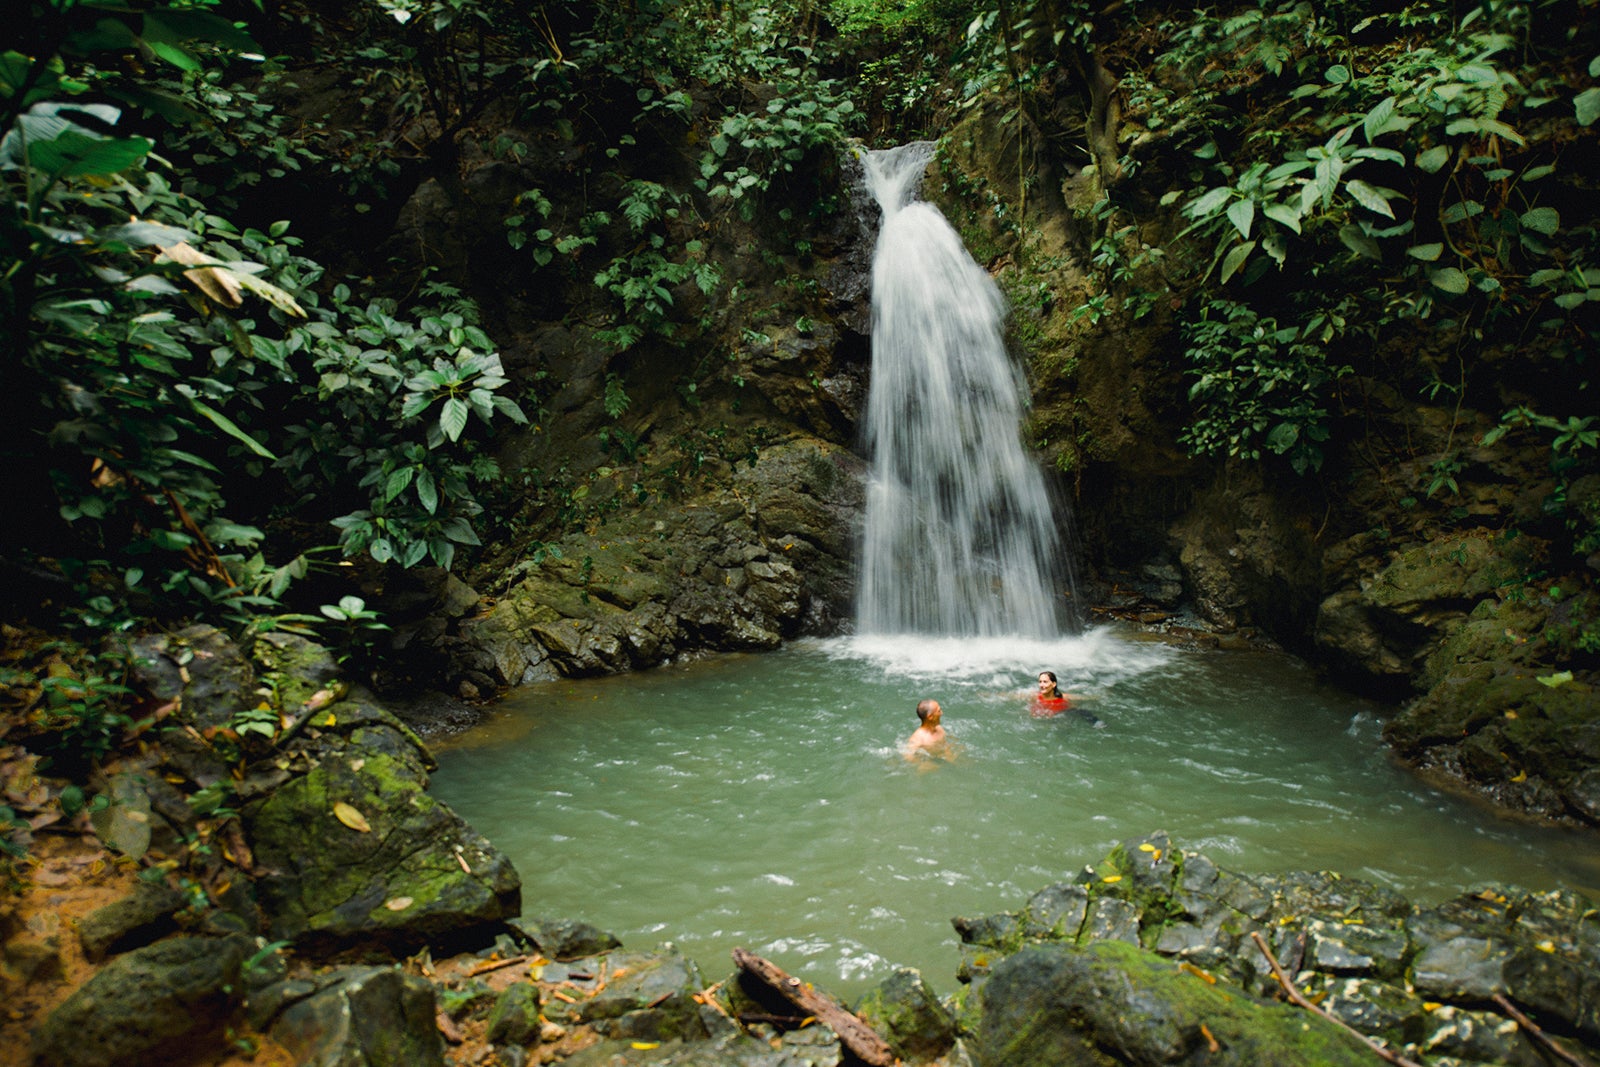 Rain forest waterfall in the Osa Peninsula of Costa Rica